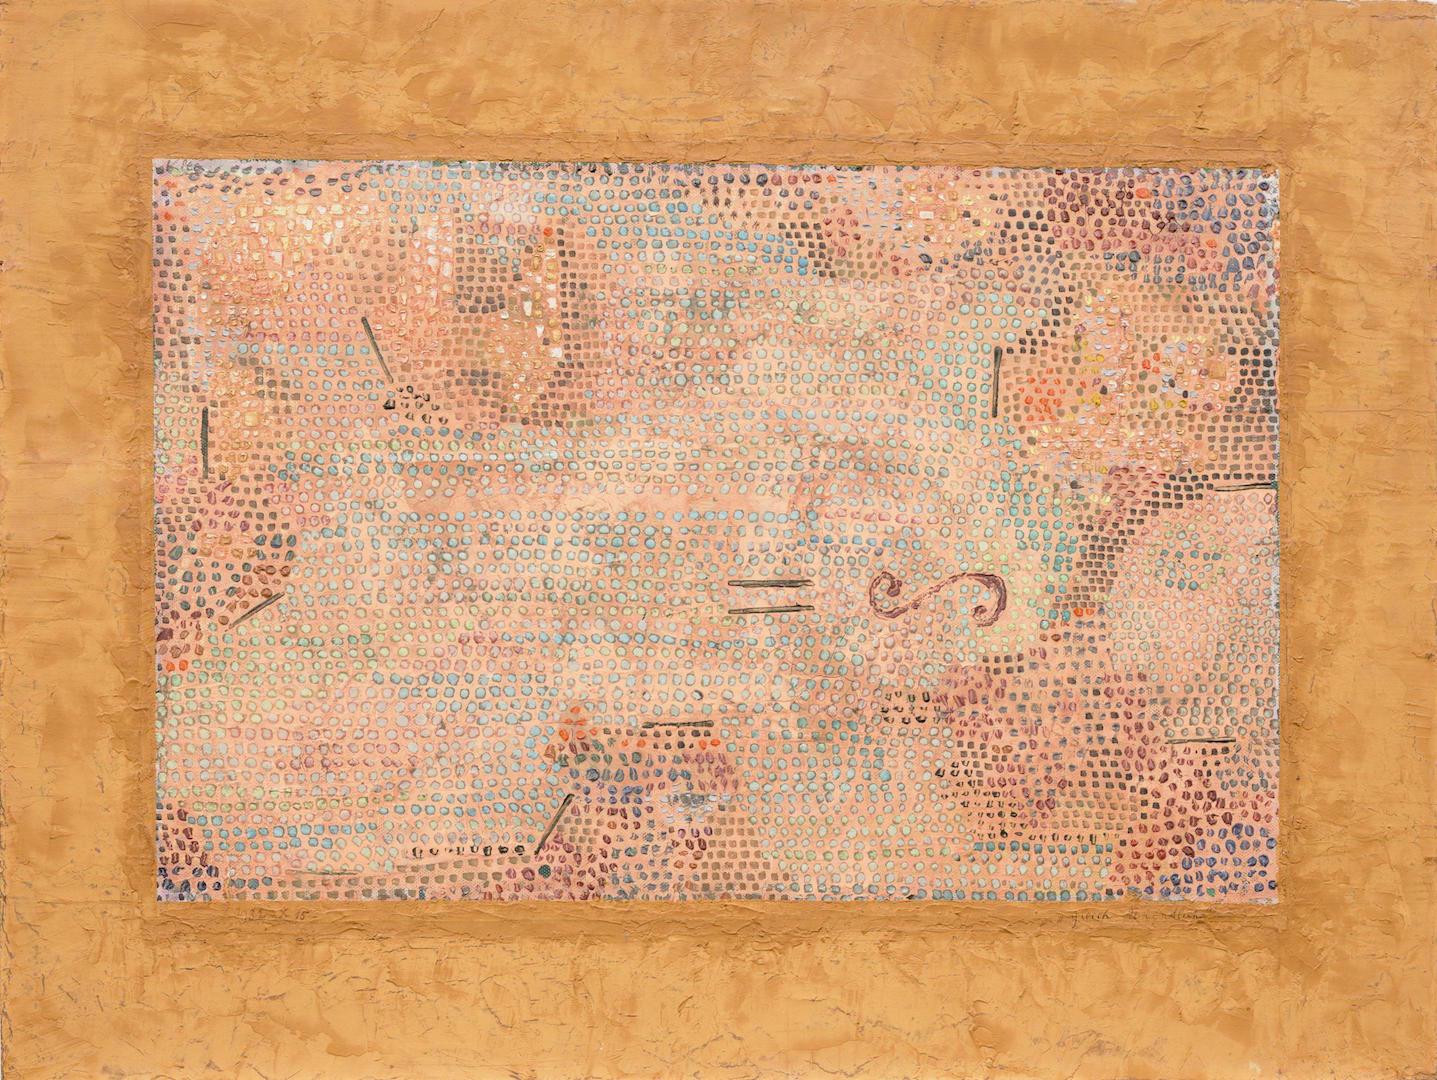 Paul Klee - Equals Infinity